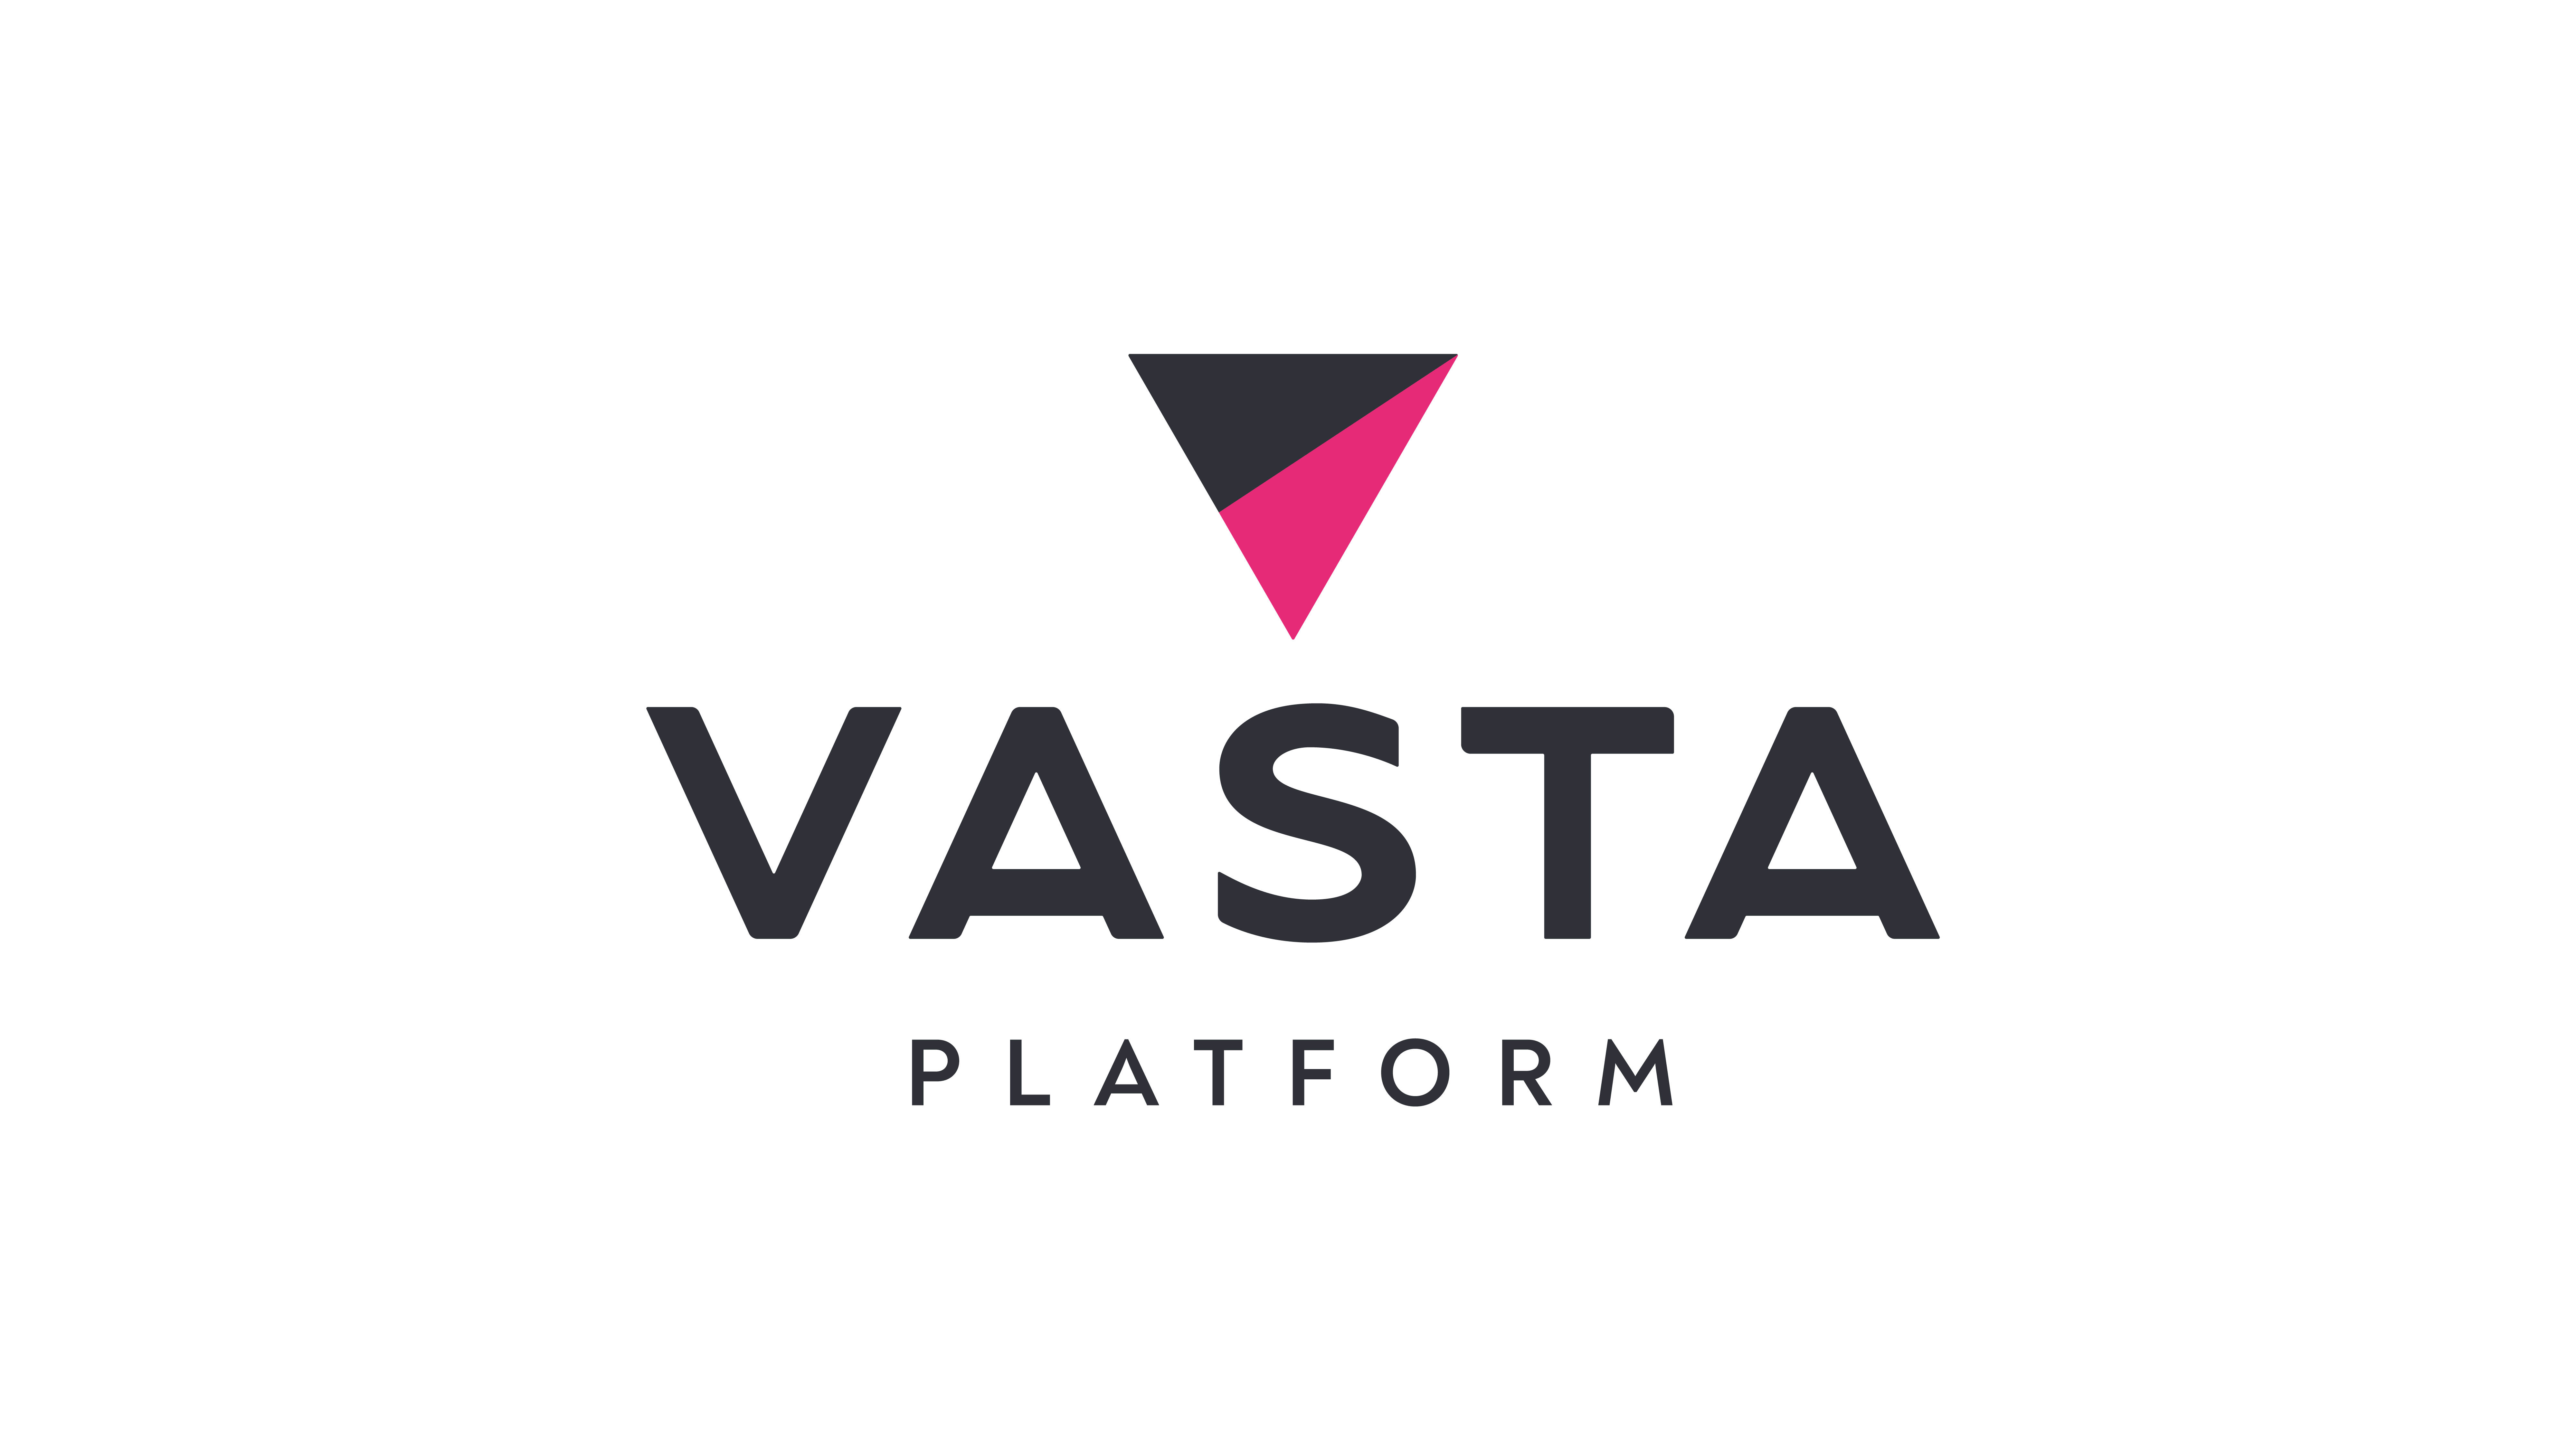 Vasta Platform (005).png